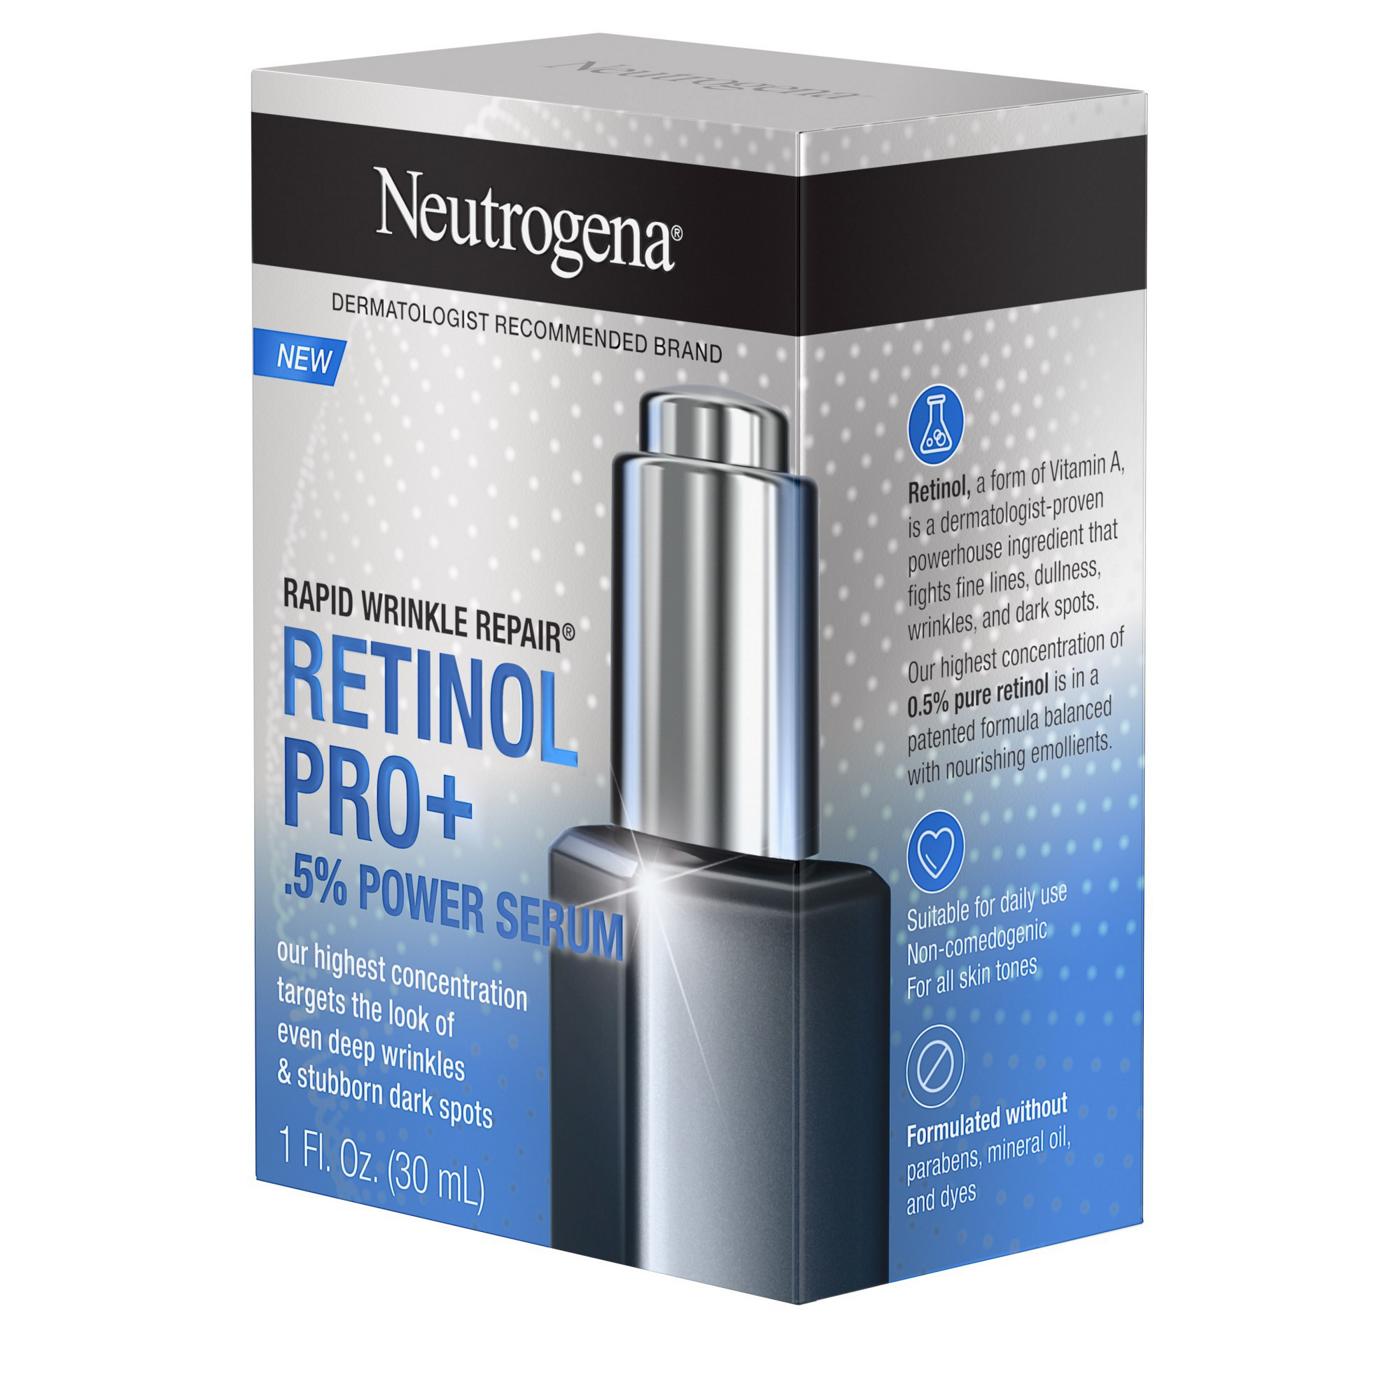 Neutrogena Rapid Wrinkle Repair Retinol Pro+ .5% Power Serum; image 2 of 5